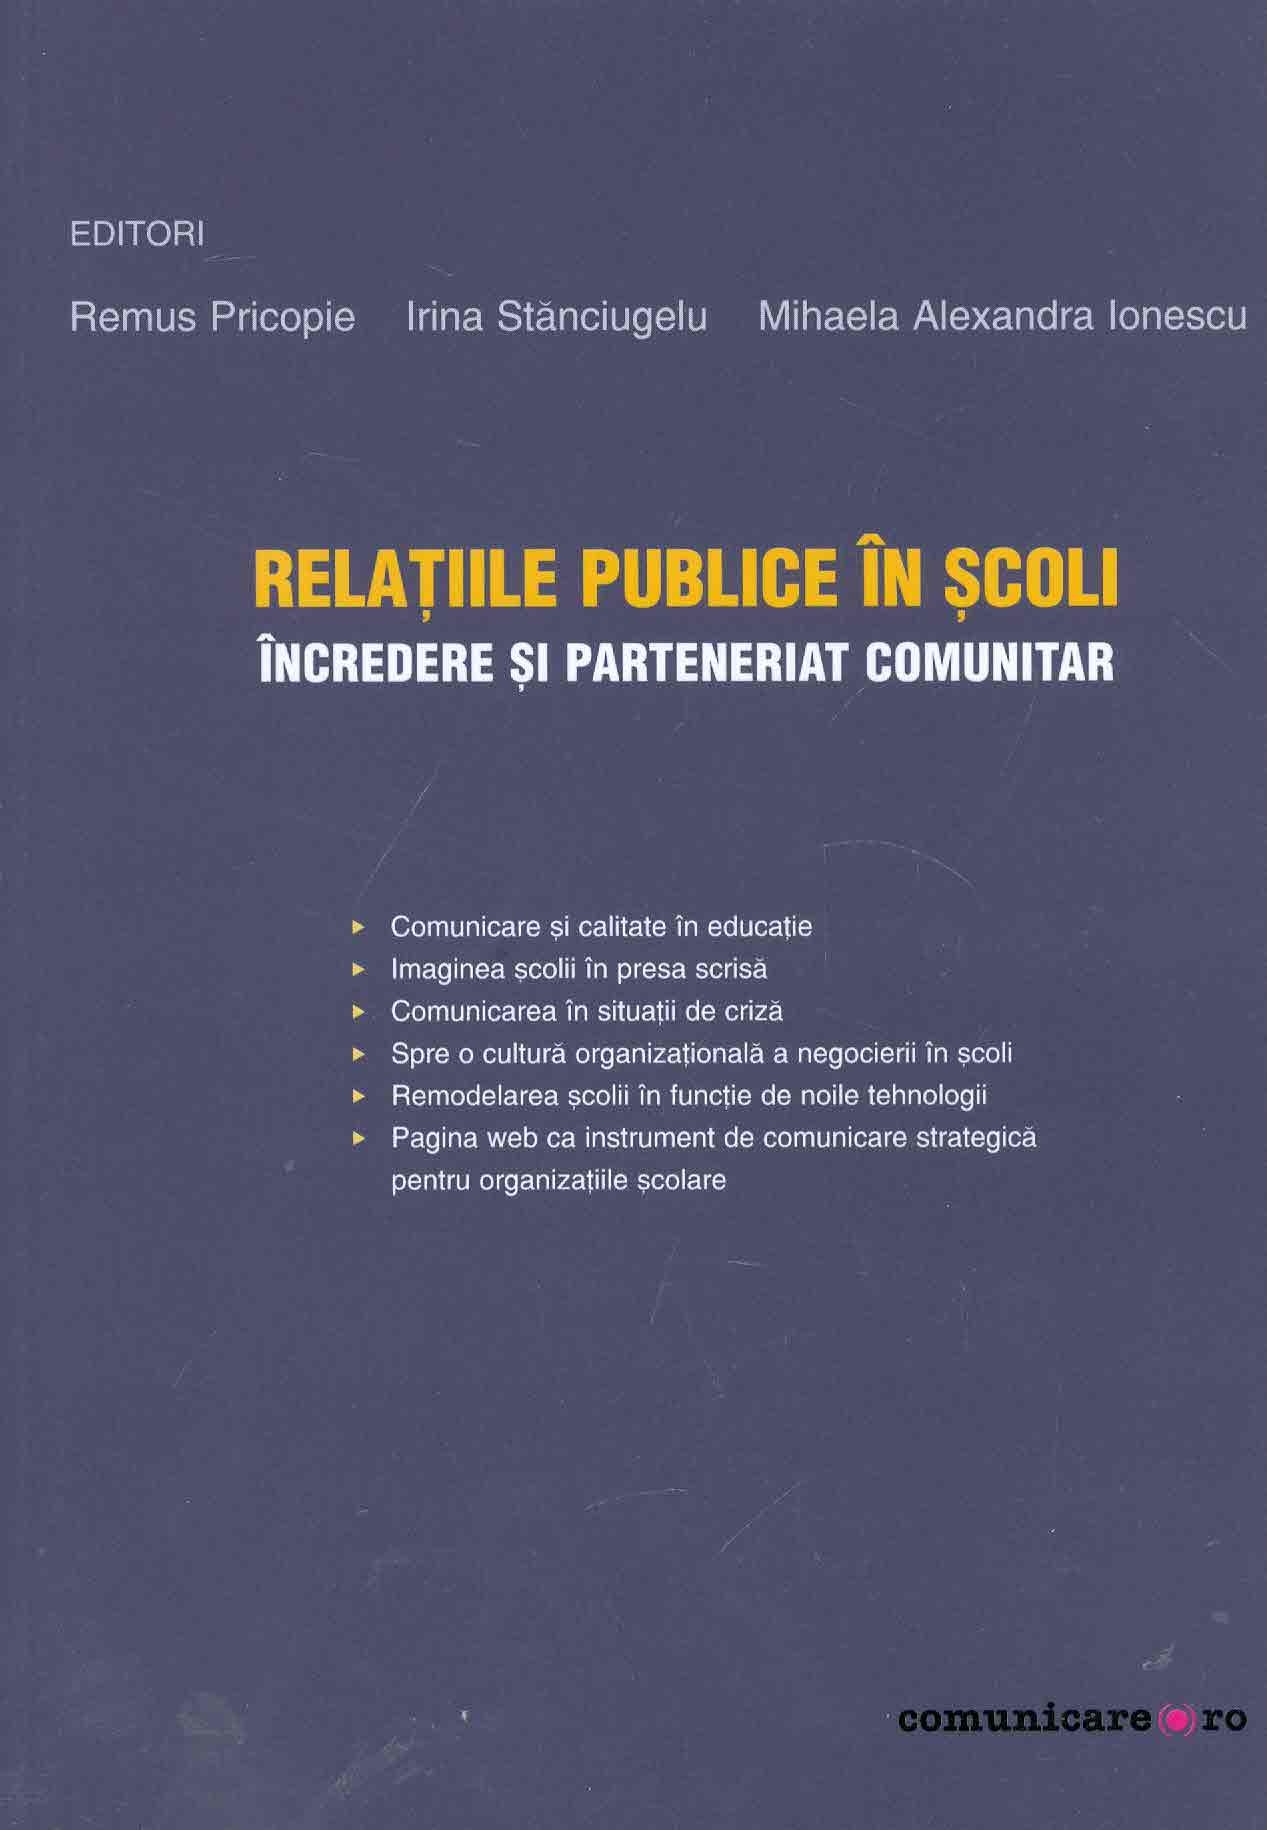 Relatiile publice in scoli | Remus Pricopie, Irina Stanciugelu, Mihaela Alexandra Ionescu